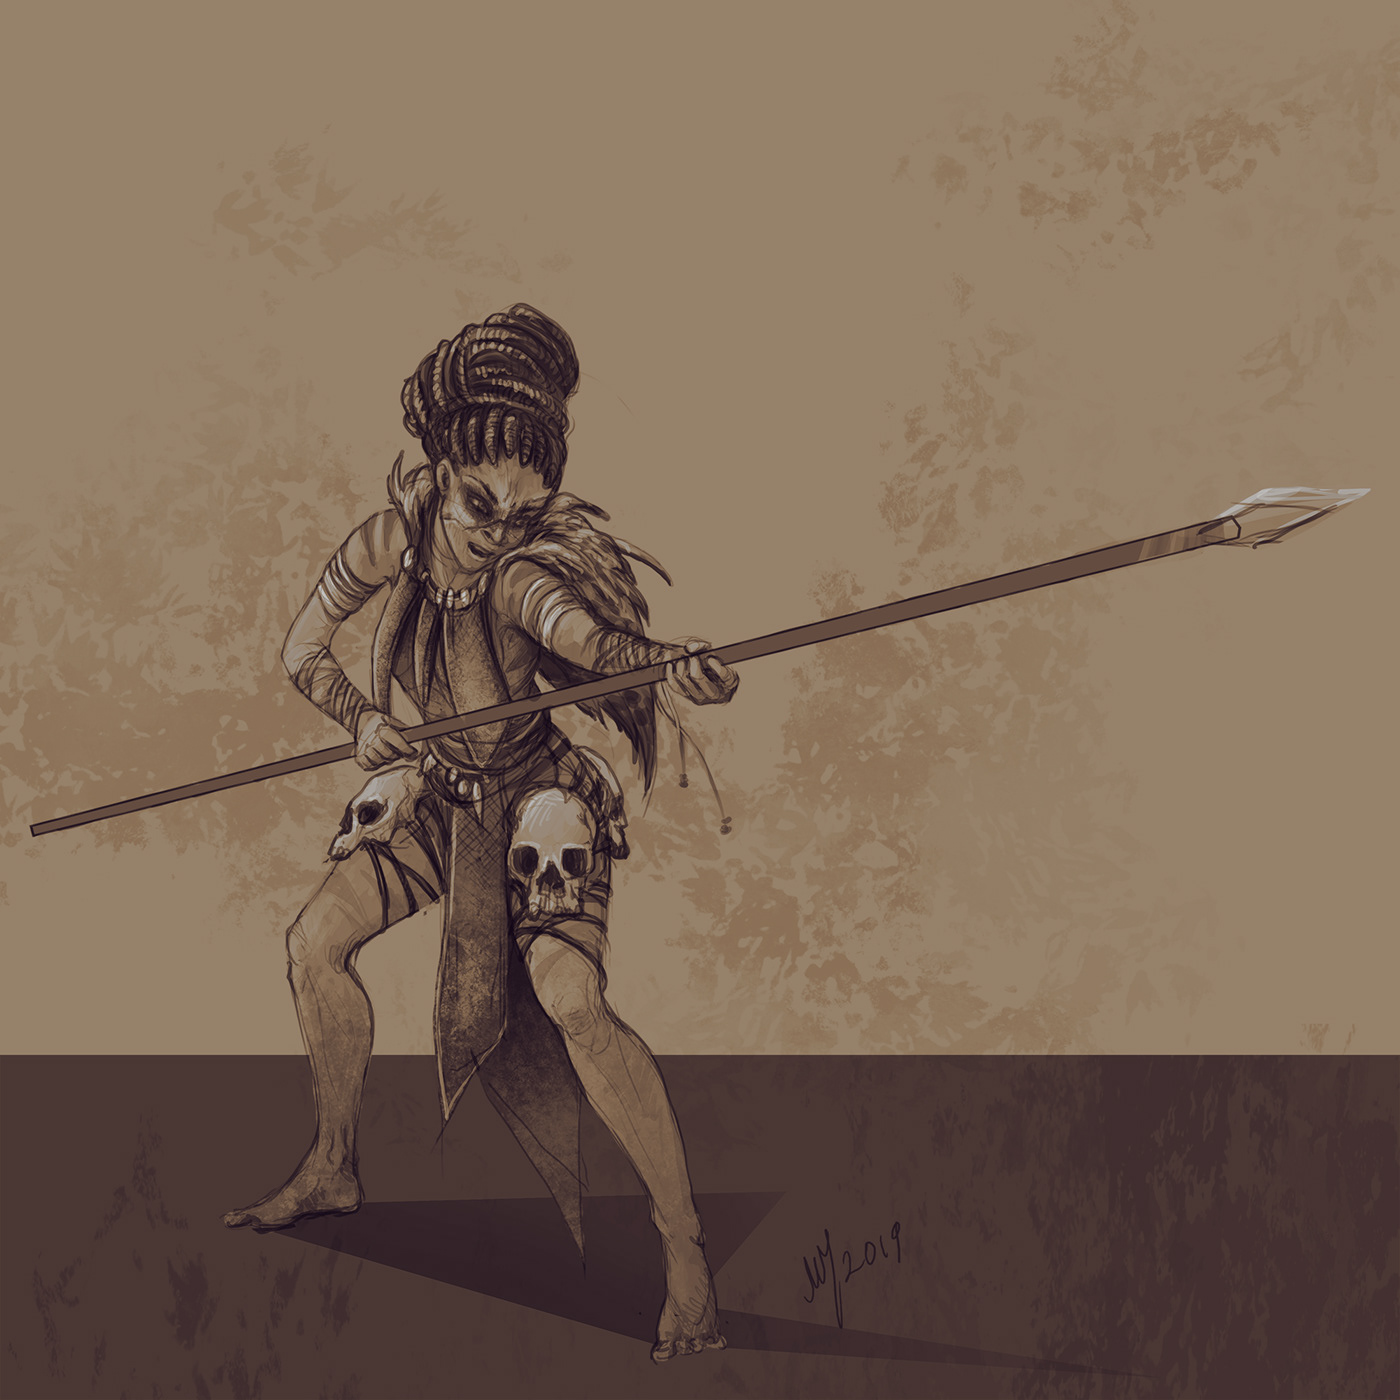 #conceptart #characterdesign #illustration #amazon #tribegirl #warrior